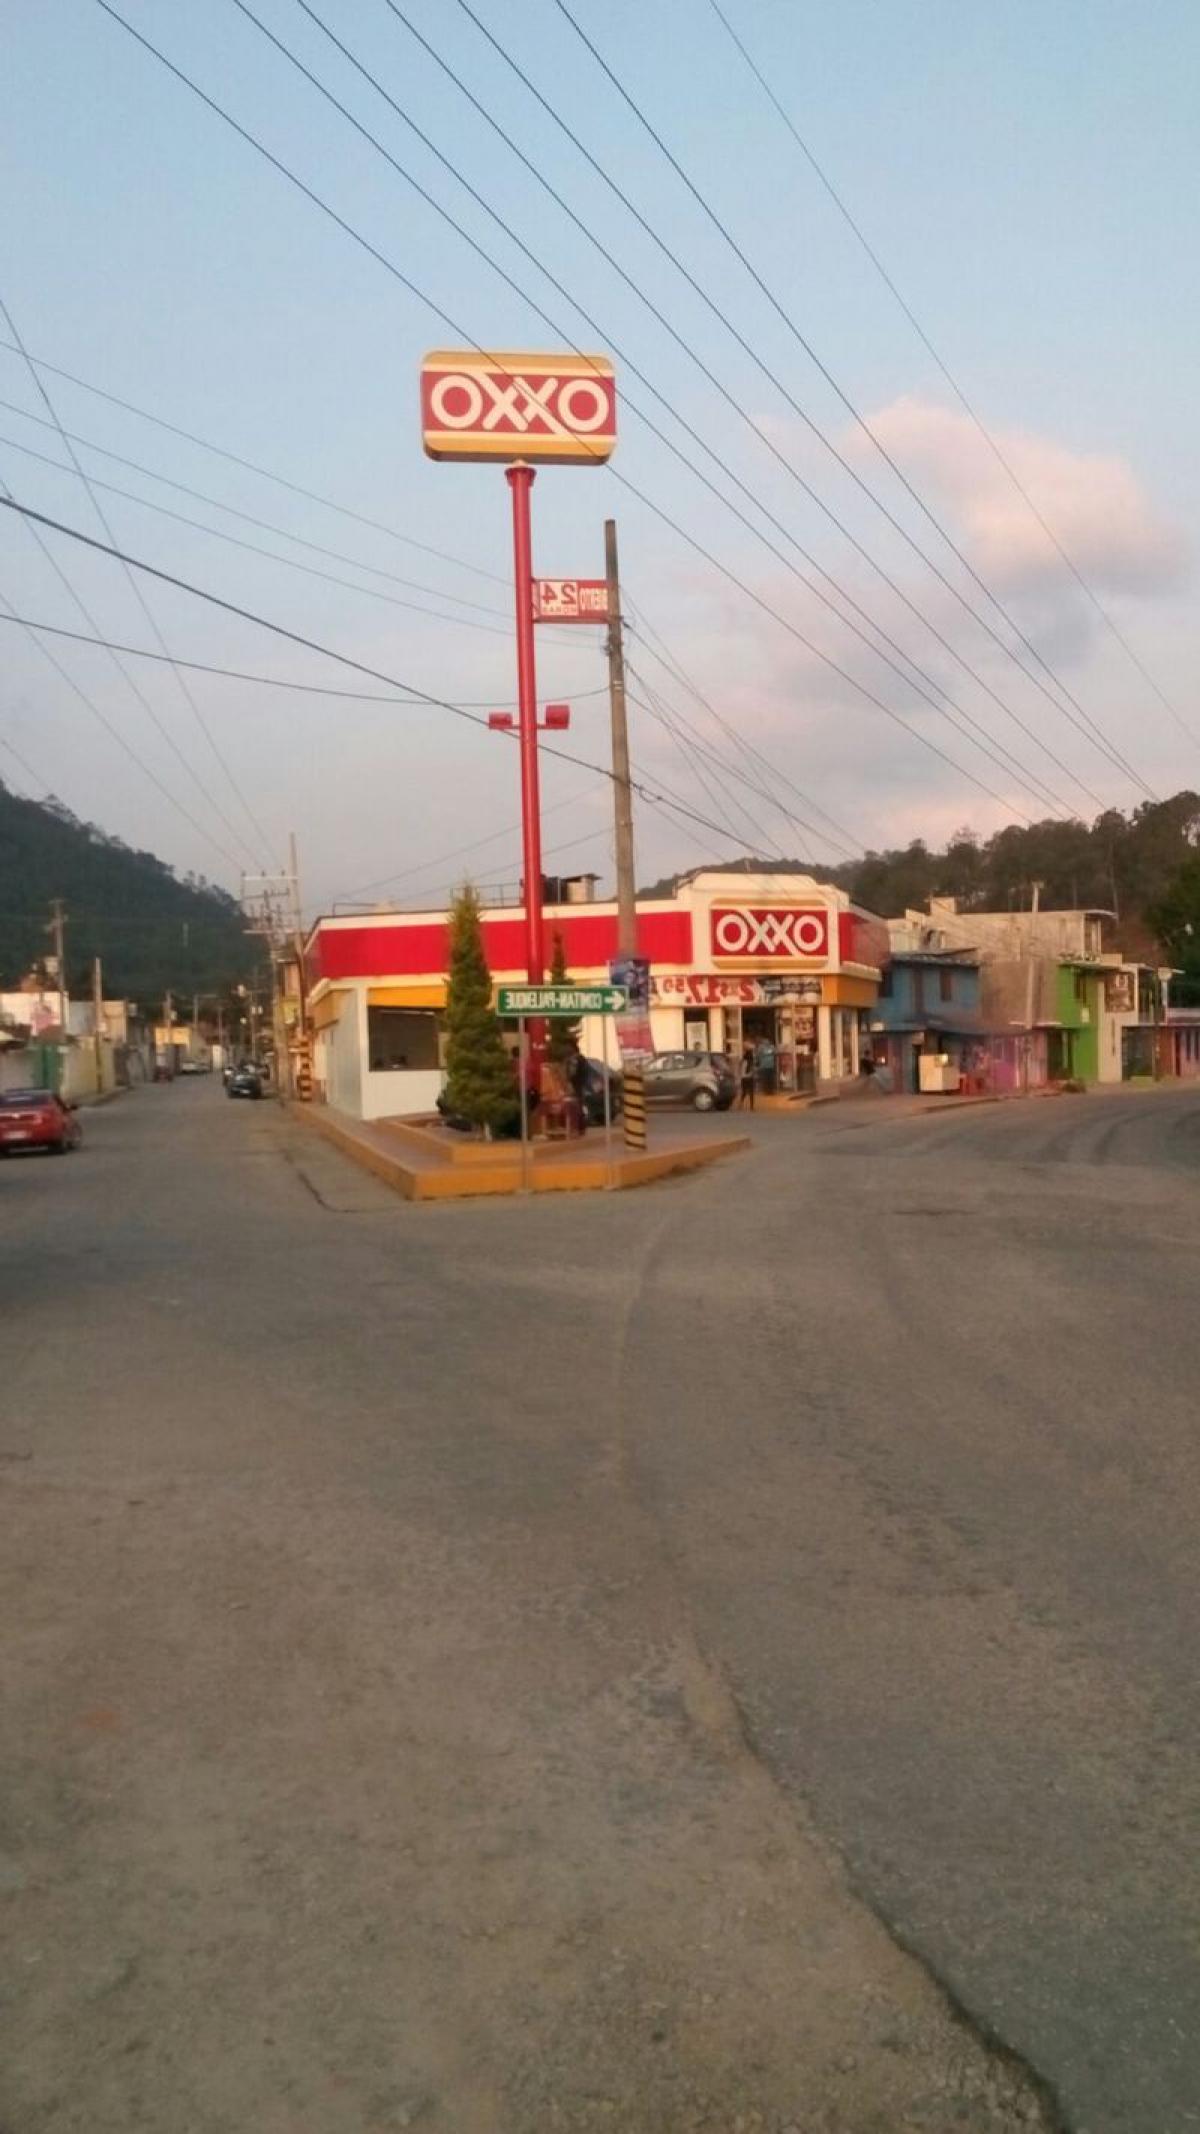 Picture of Other Commercial For Sale in San Cristobal De Las Casas, Chiapas, Mexico